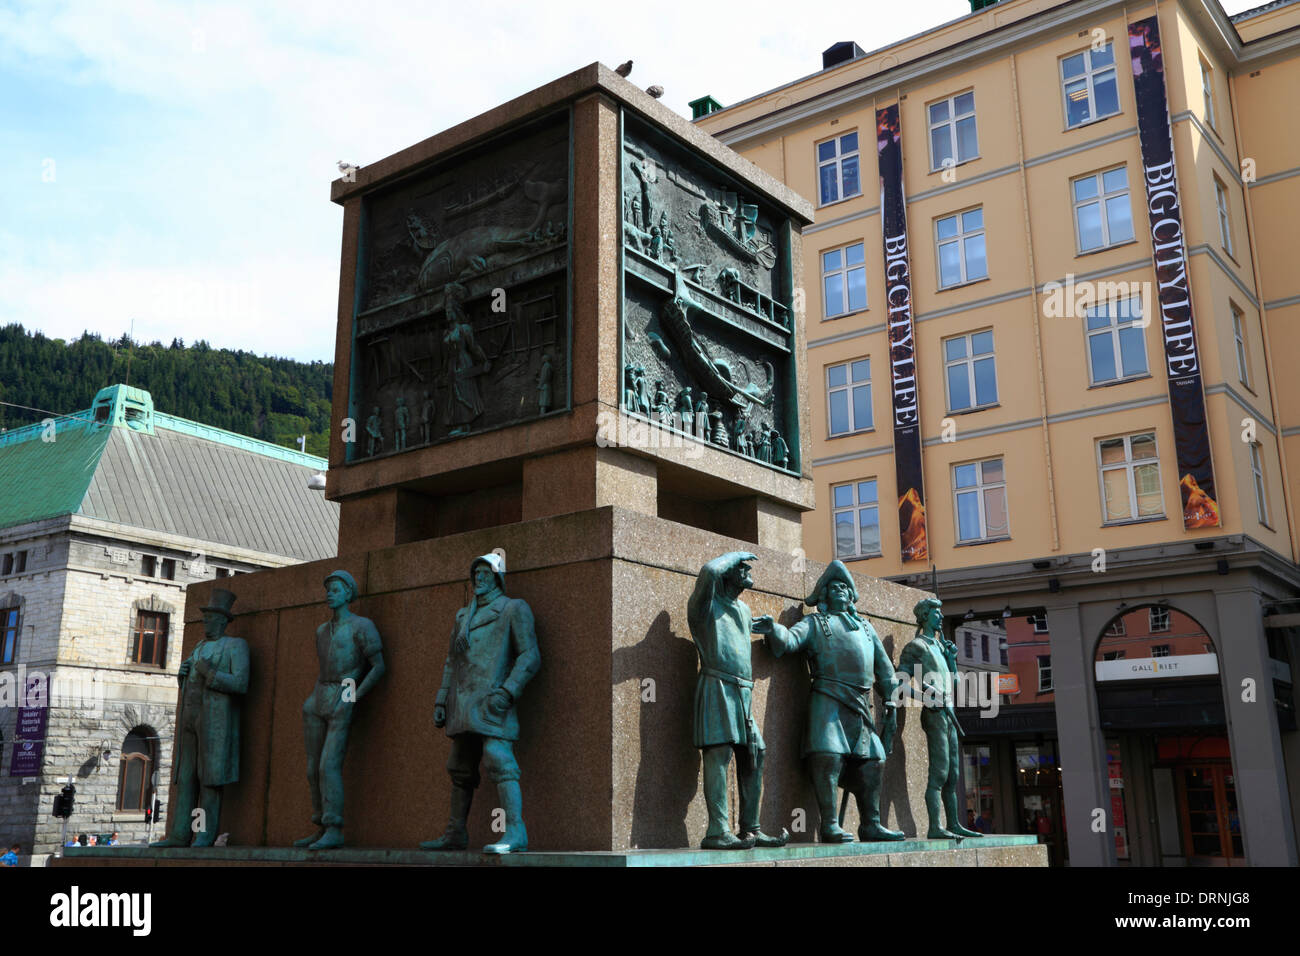 The Sjømannsmonumentet (sailors monument) in Torgallmenningen, Bergen city, Norway. Stock Photo